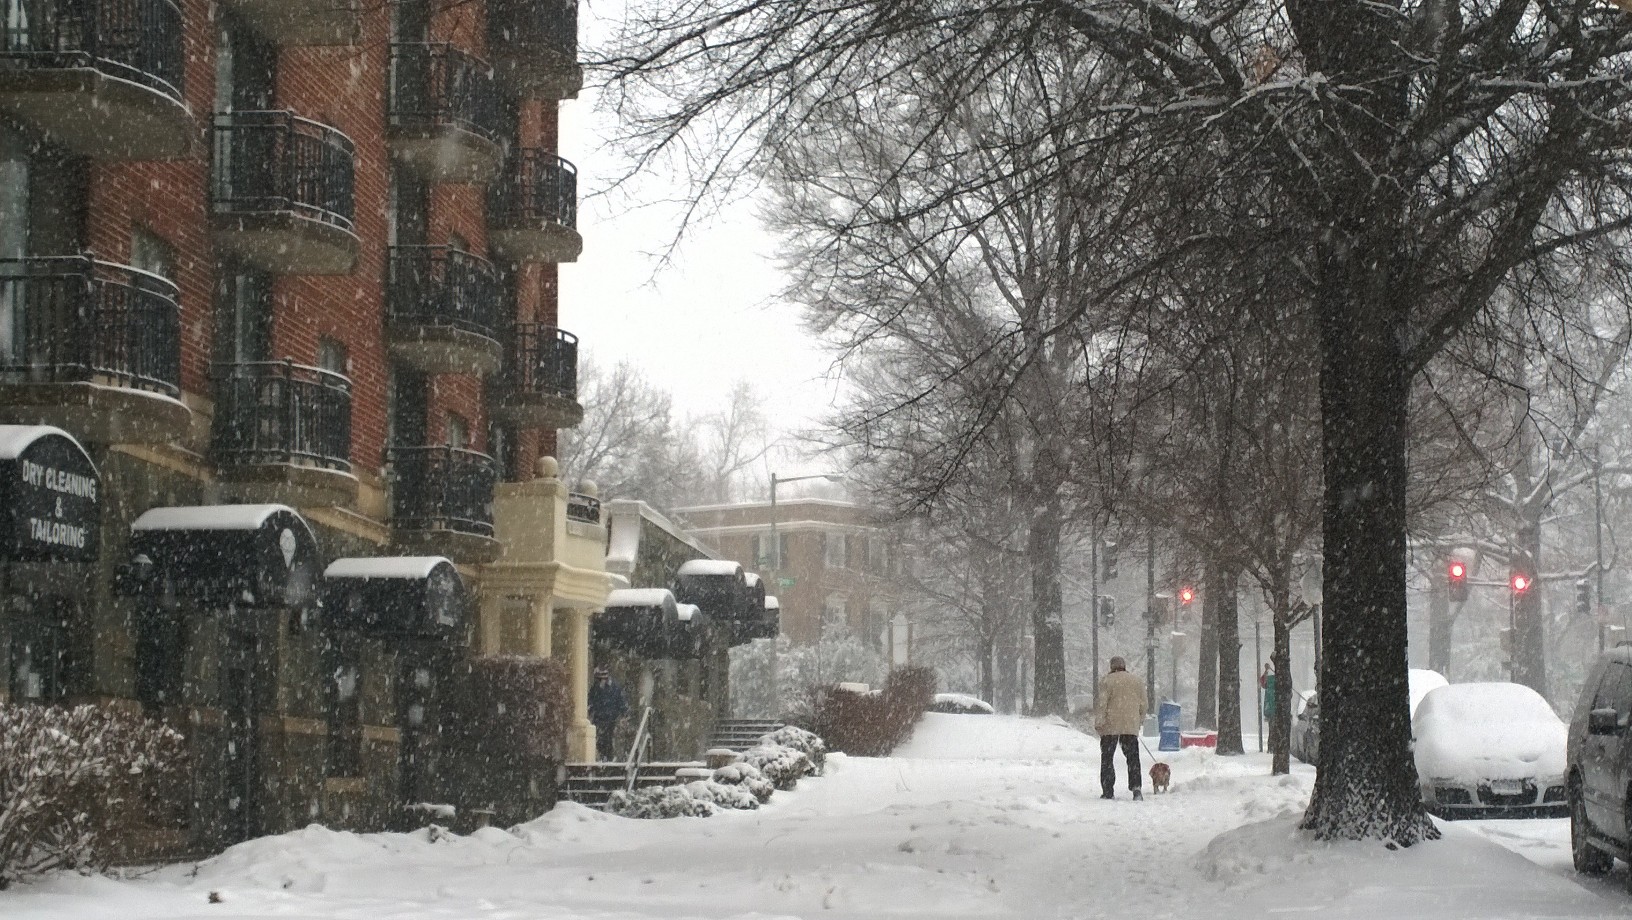 Pennsylvania Avenue NW in the snow. (WTOP/Megan Matthews)